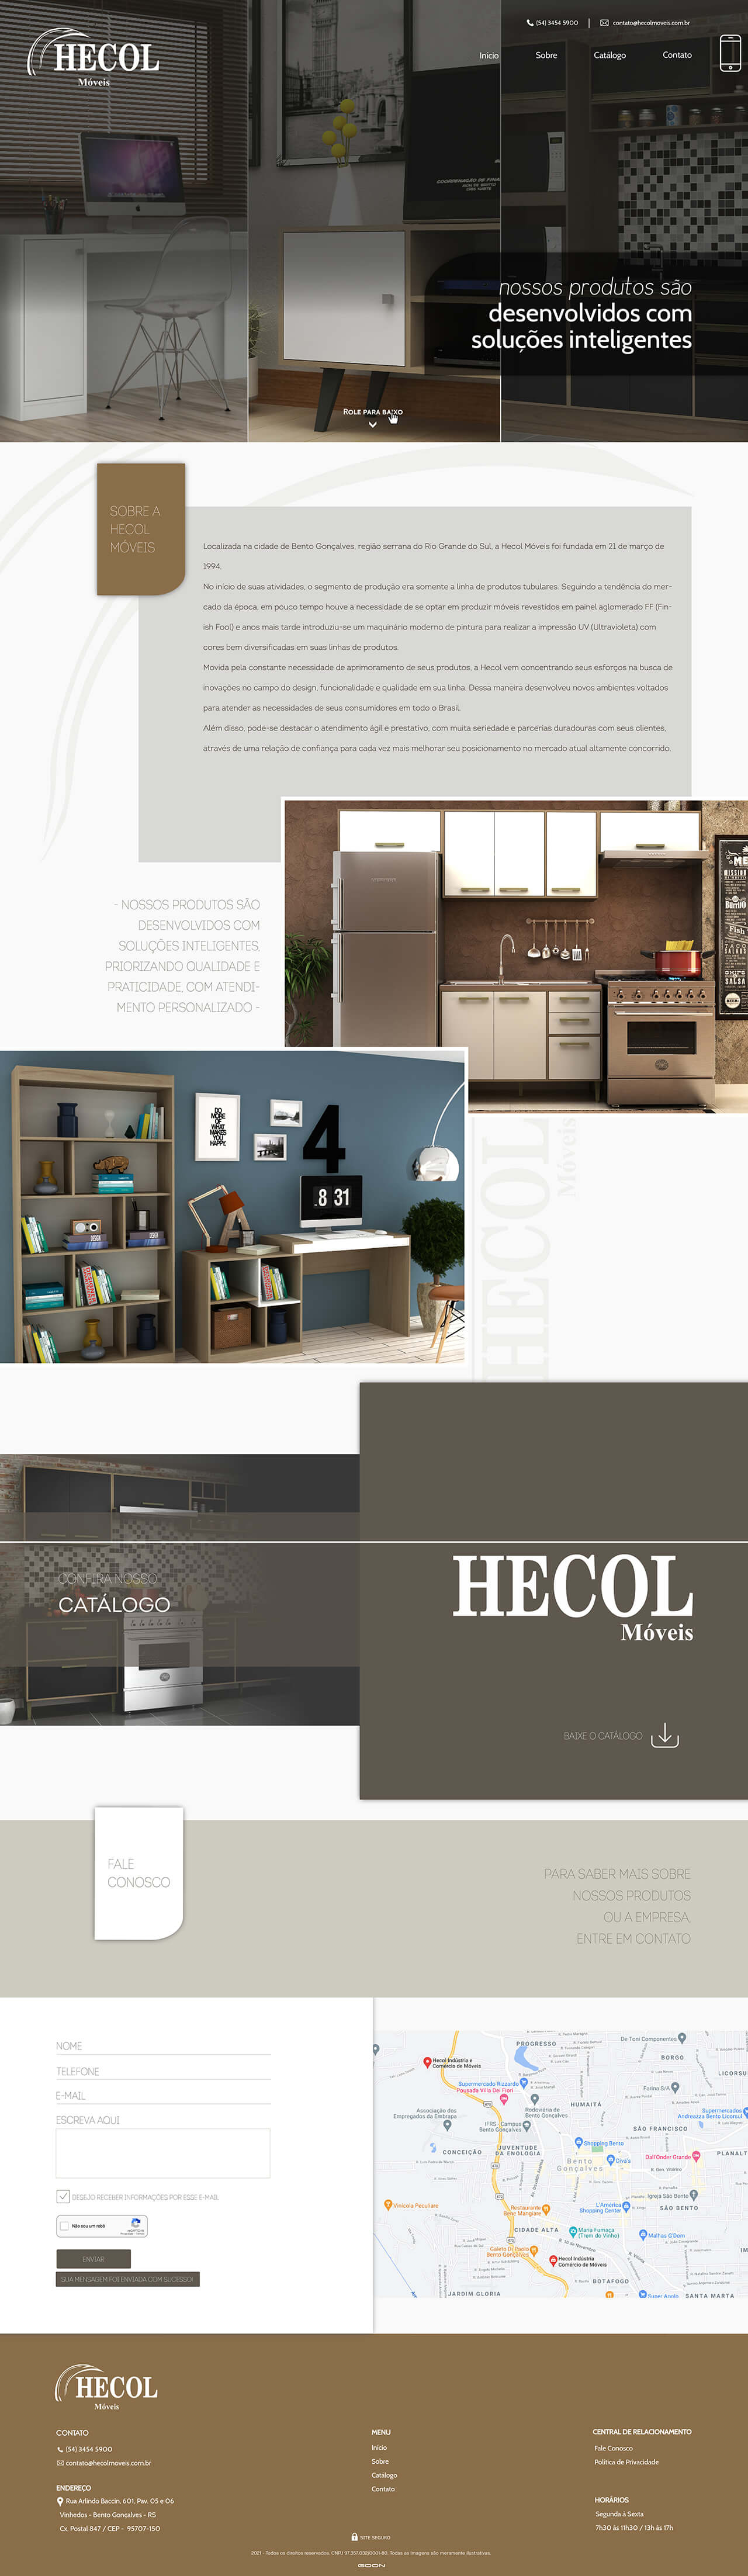 Hecol layout desktop version